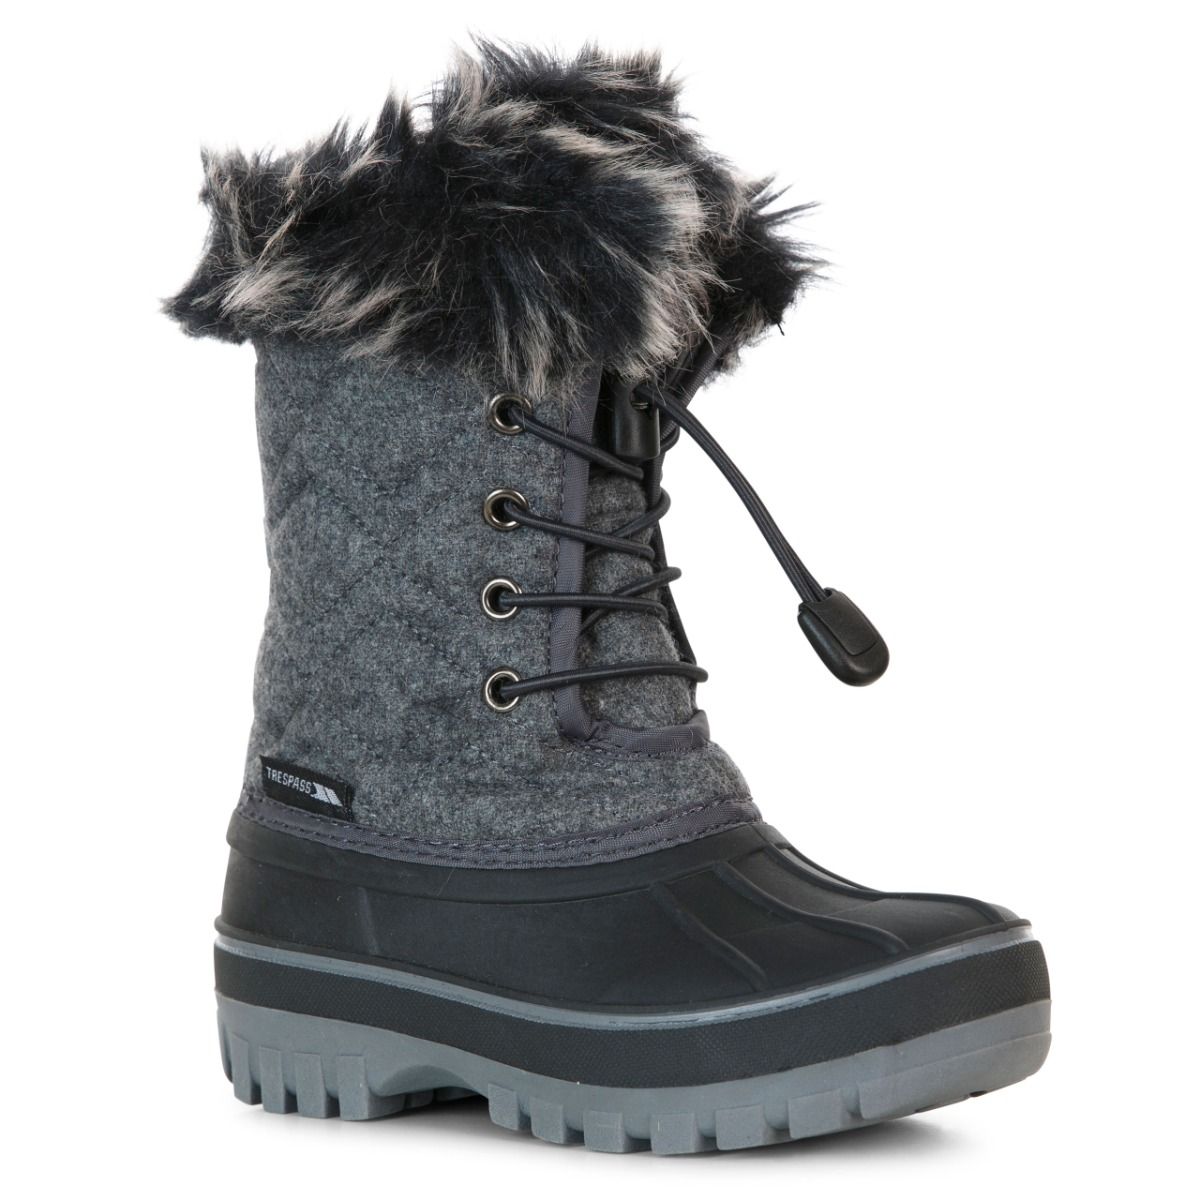 Trespass Kids Snow Boots Waterproof Fleece Lined Aine